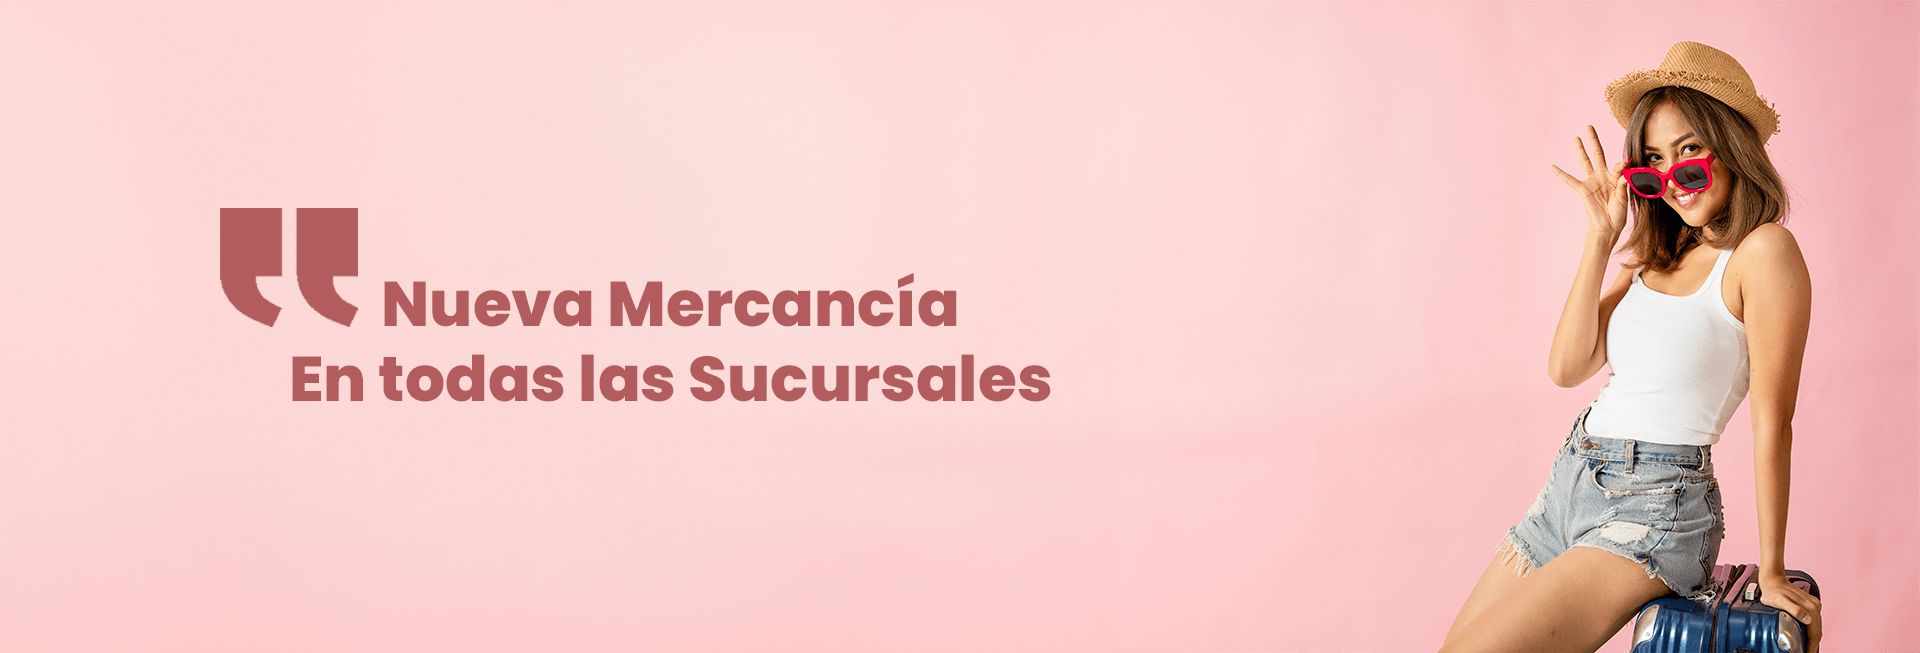 banner-nueva-mercancia-1